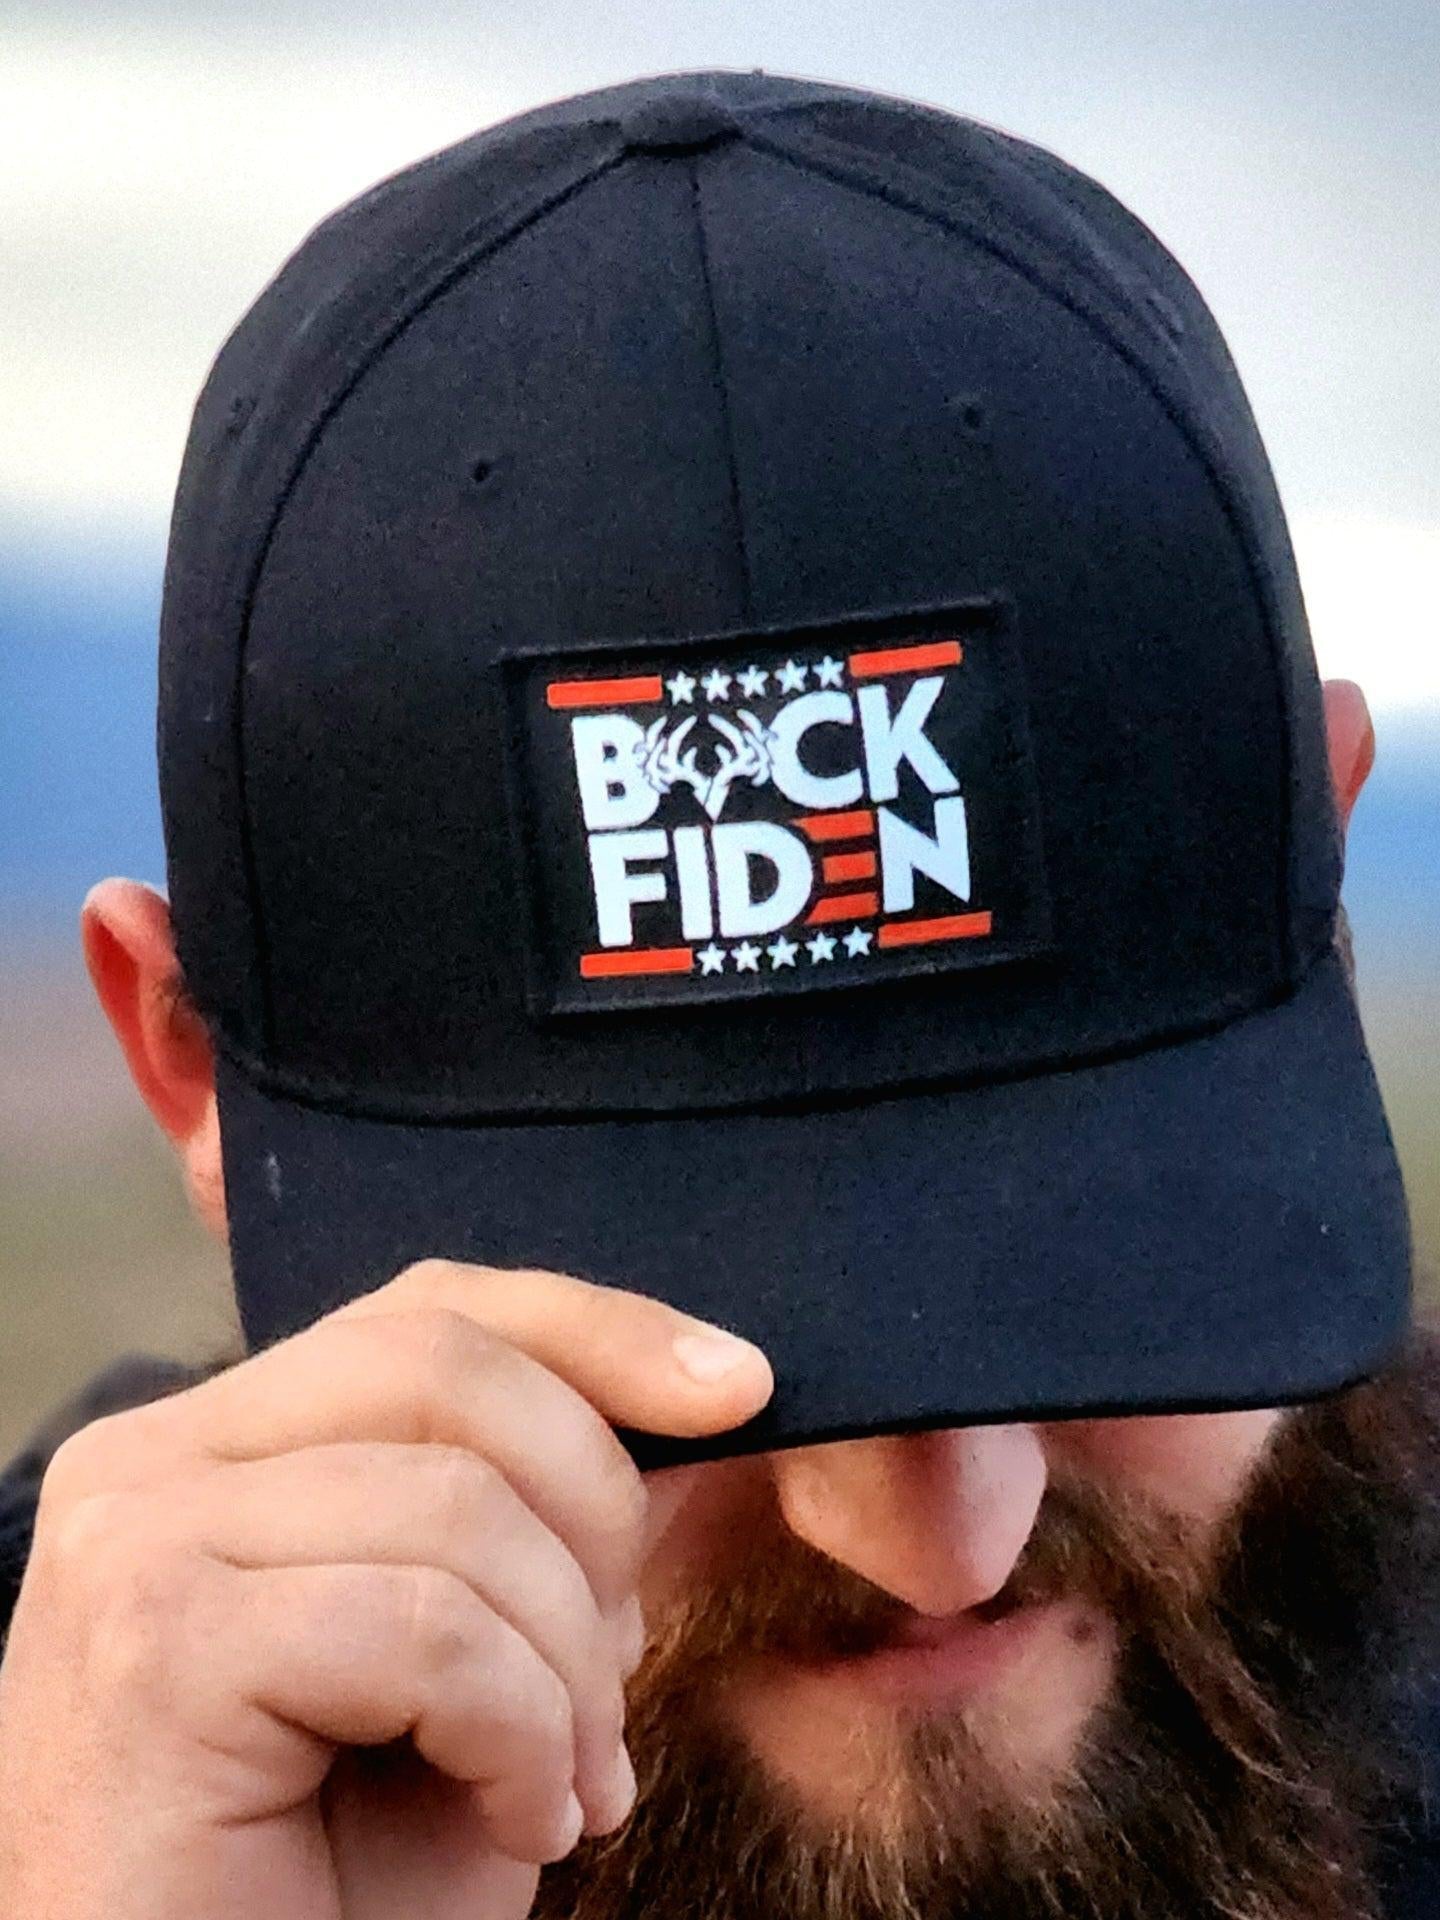 Fiden Hat at ™ RakAdx Buck FlexFit